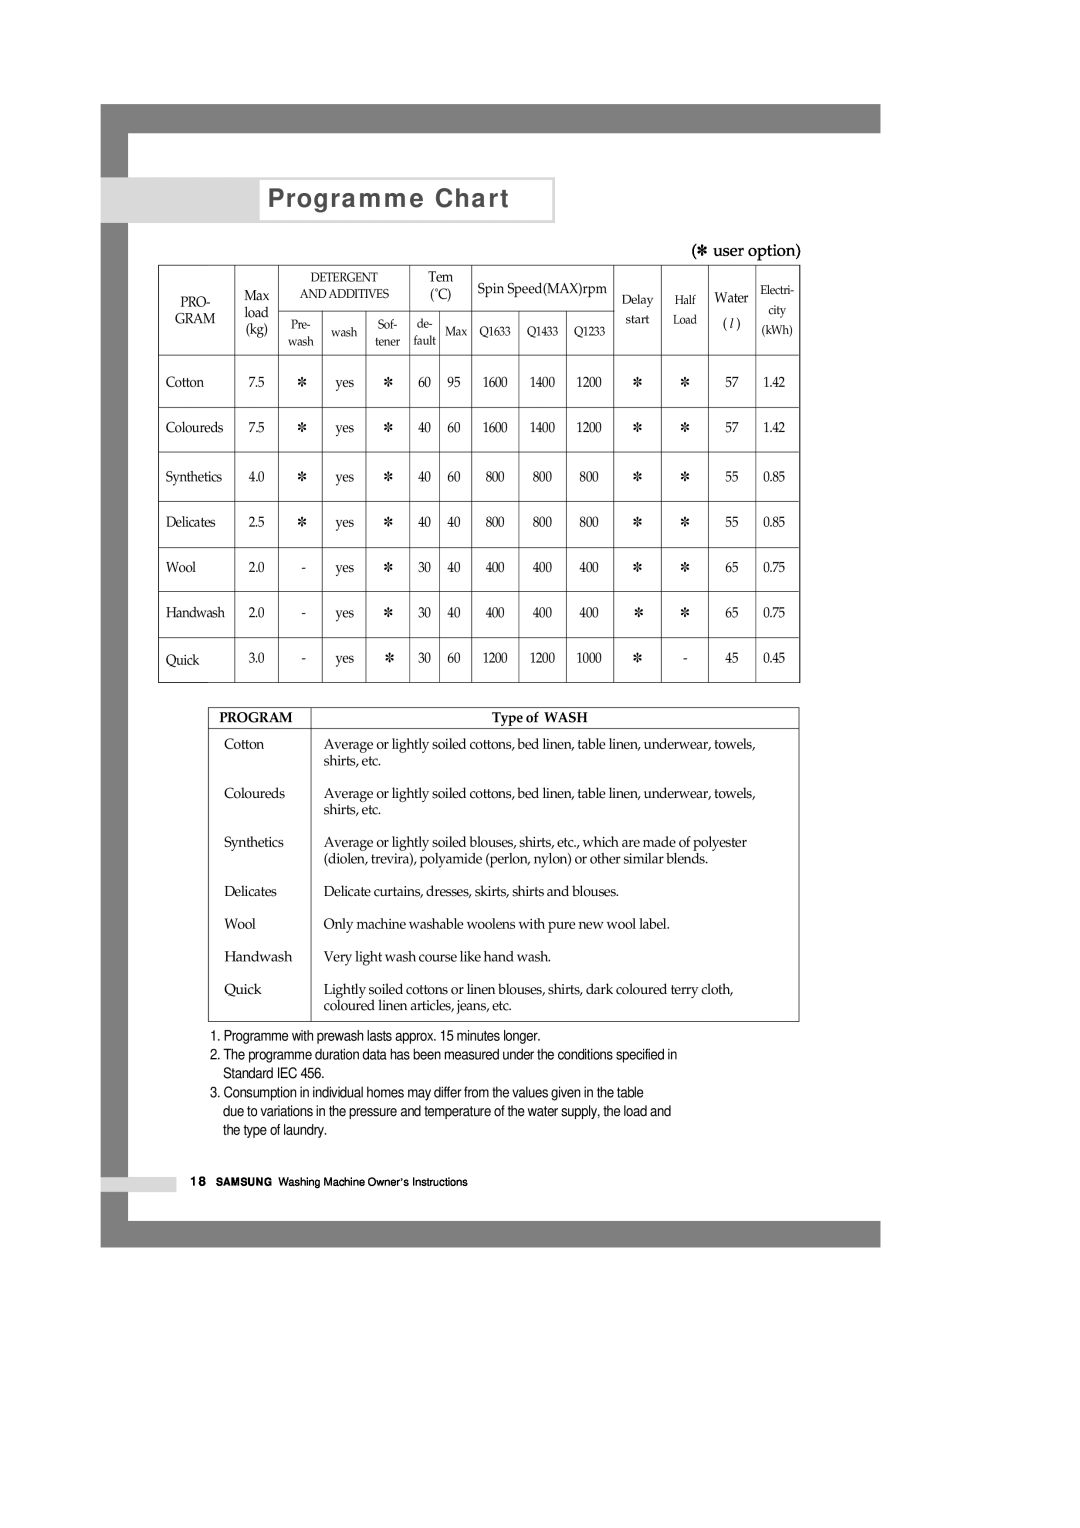 Samsung Q1233, Q1433, Q1633 manual Programme Chart, user option, Type of WASH 